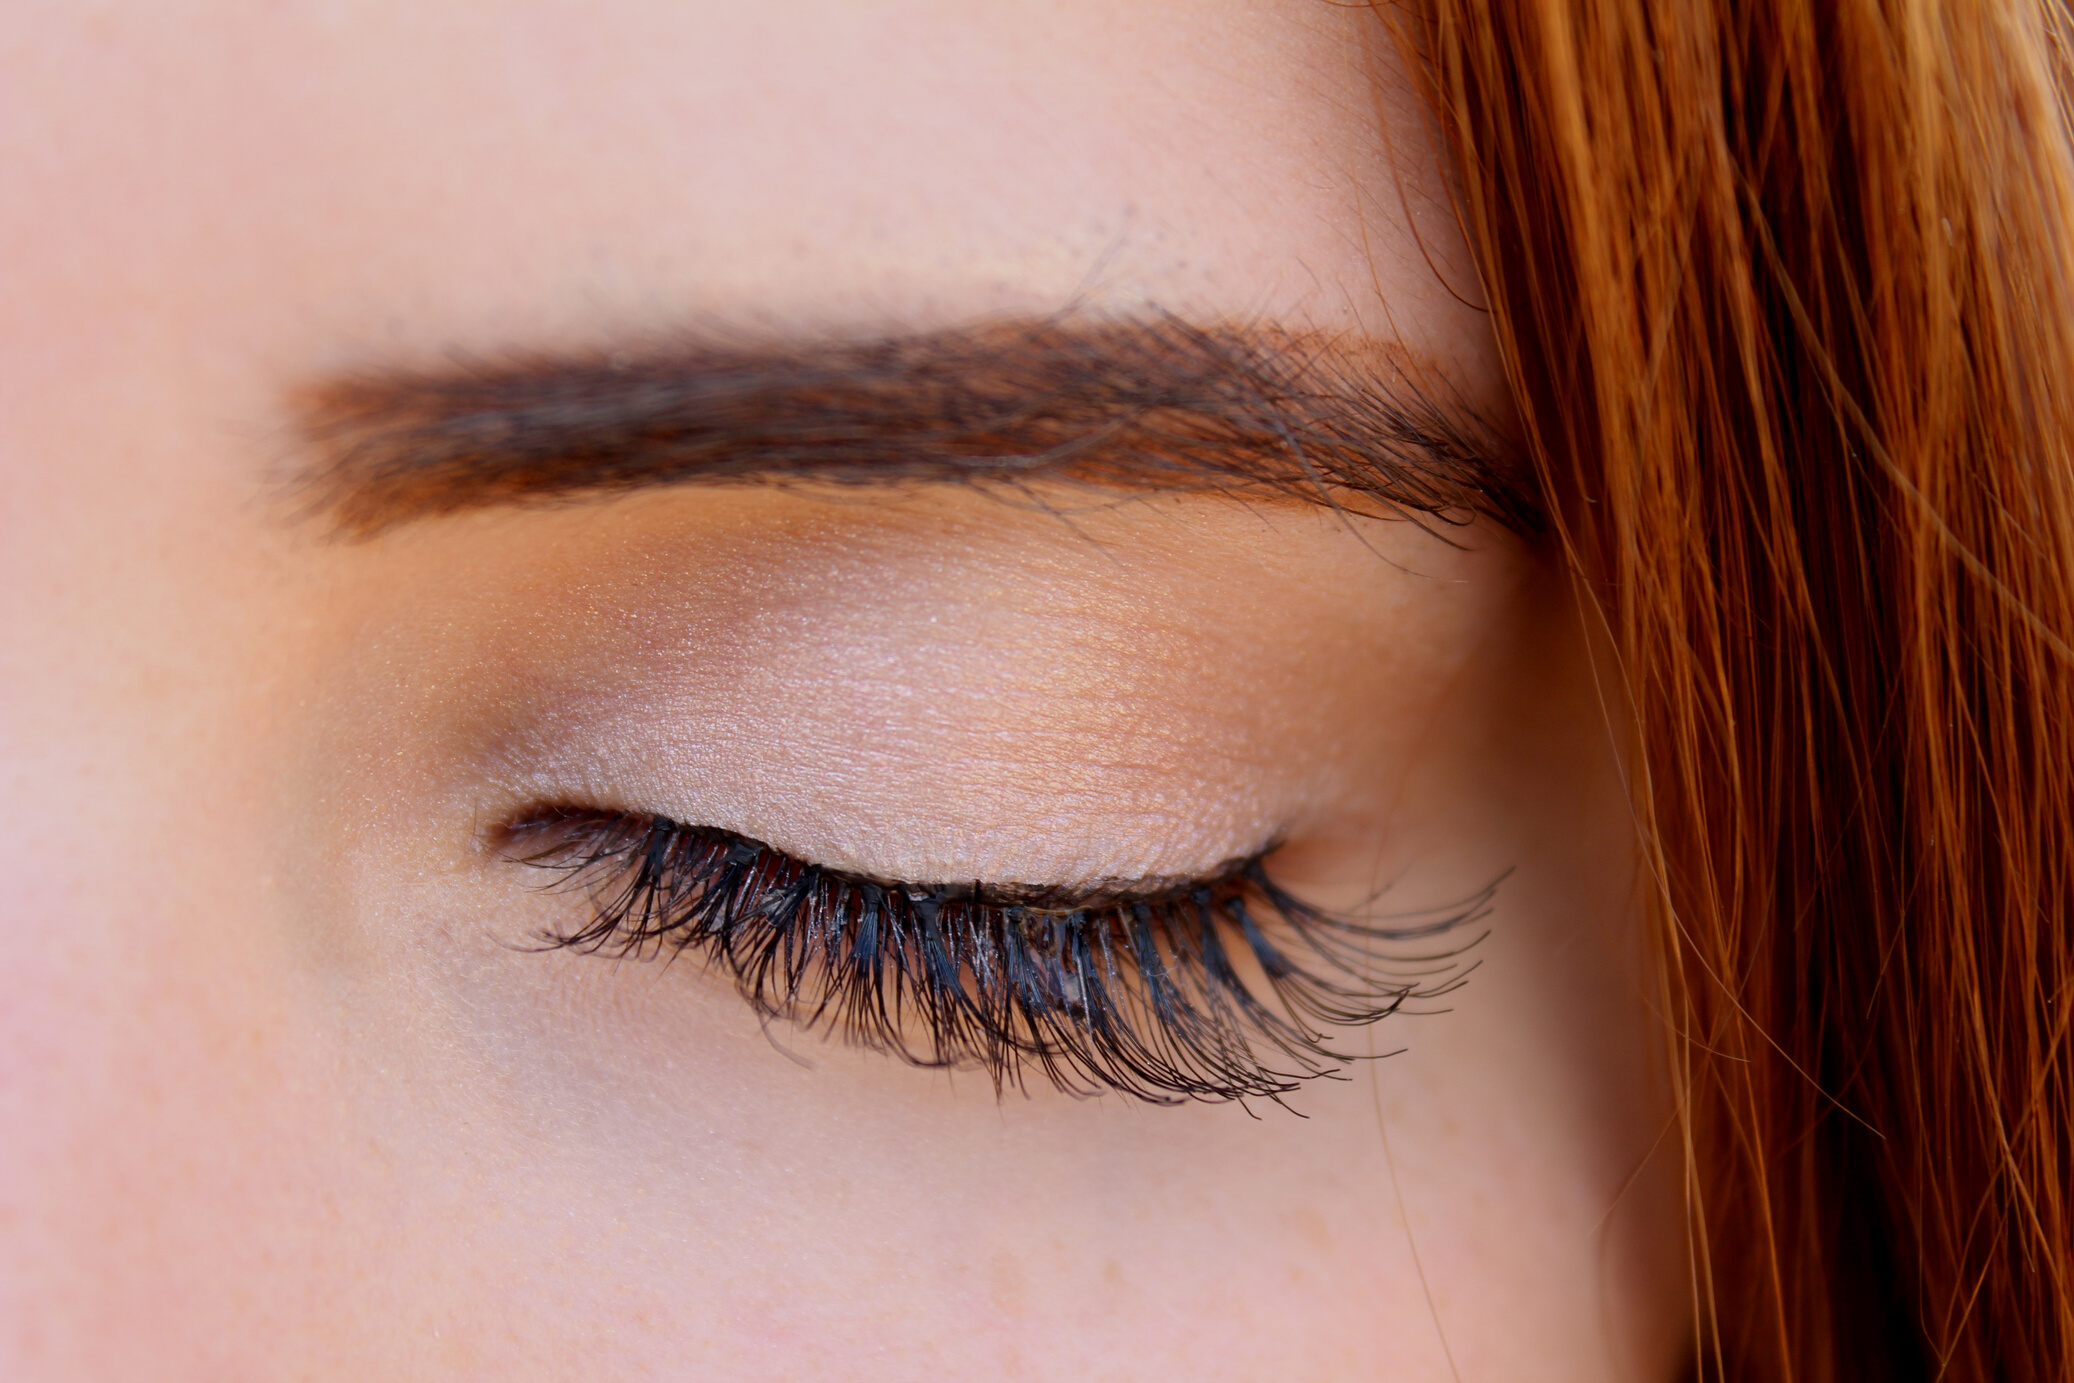 Closeup of a Woman's Eyelashes with Mascara